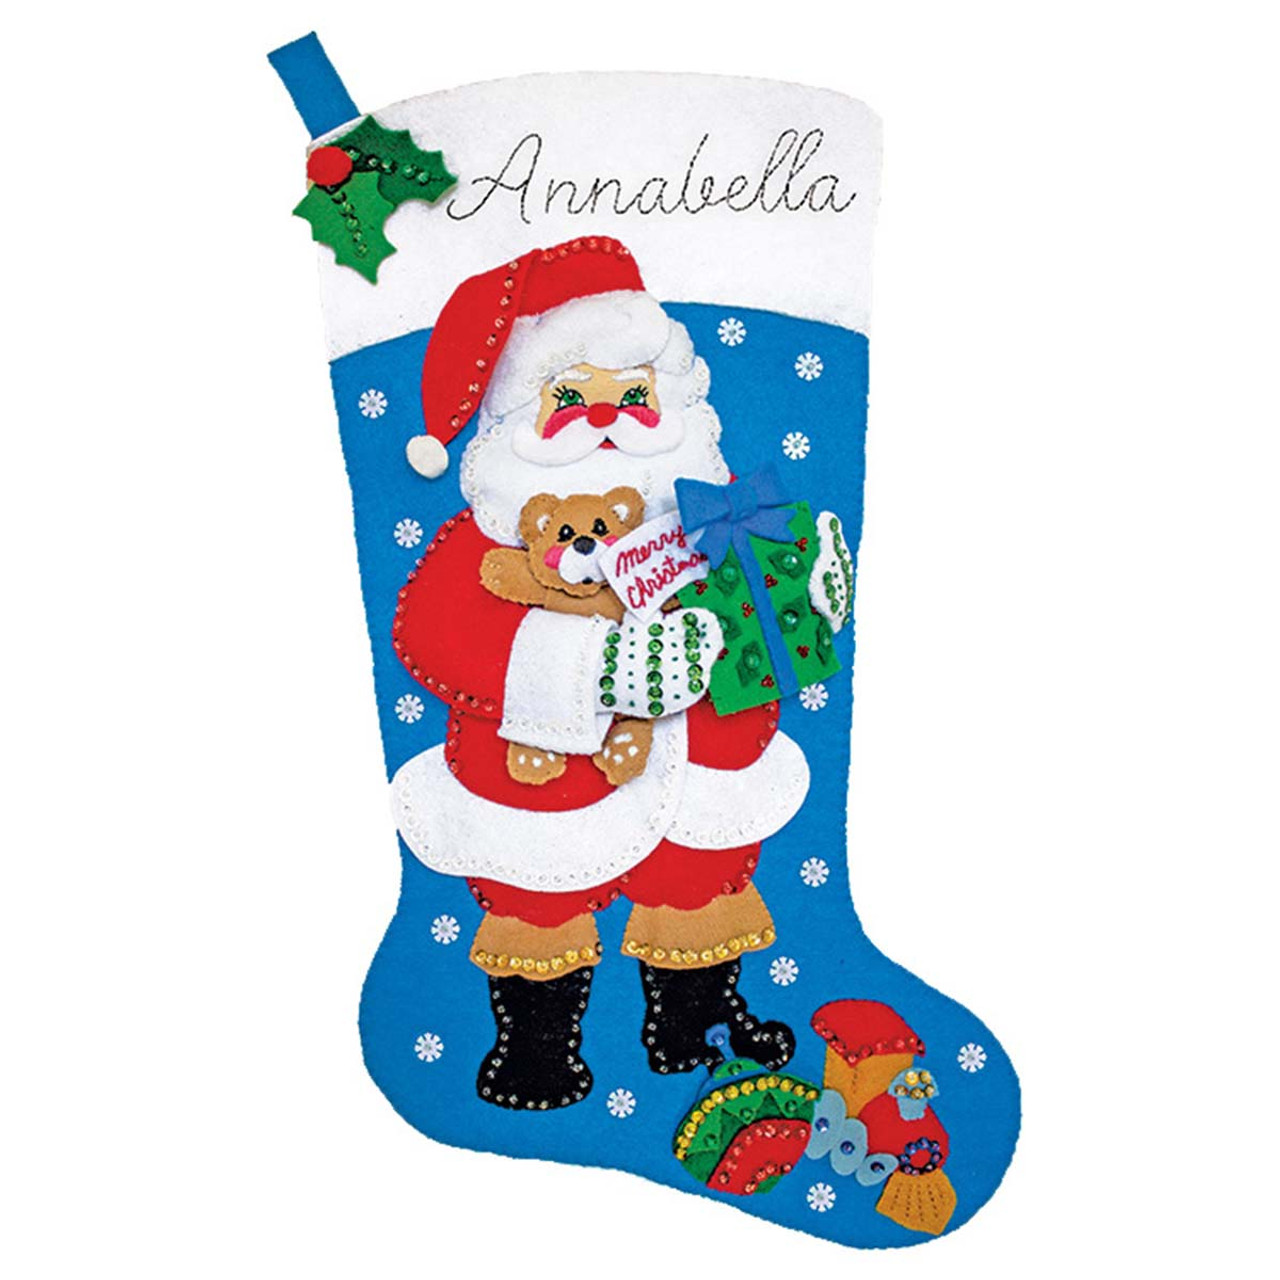 Bucilla Christmas Town Stocking Kit